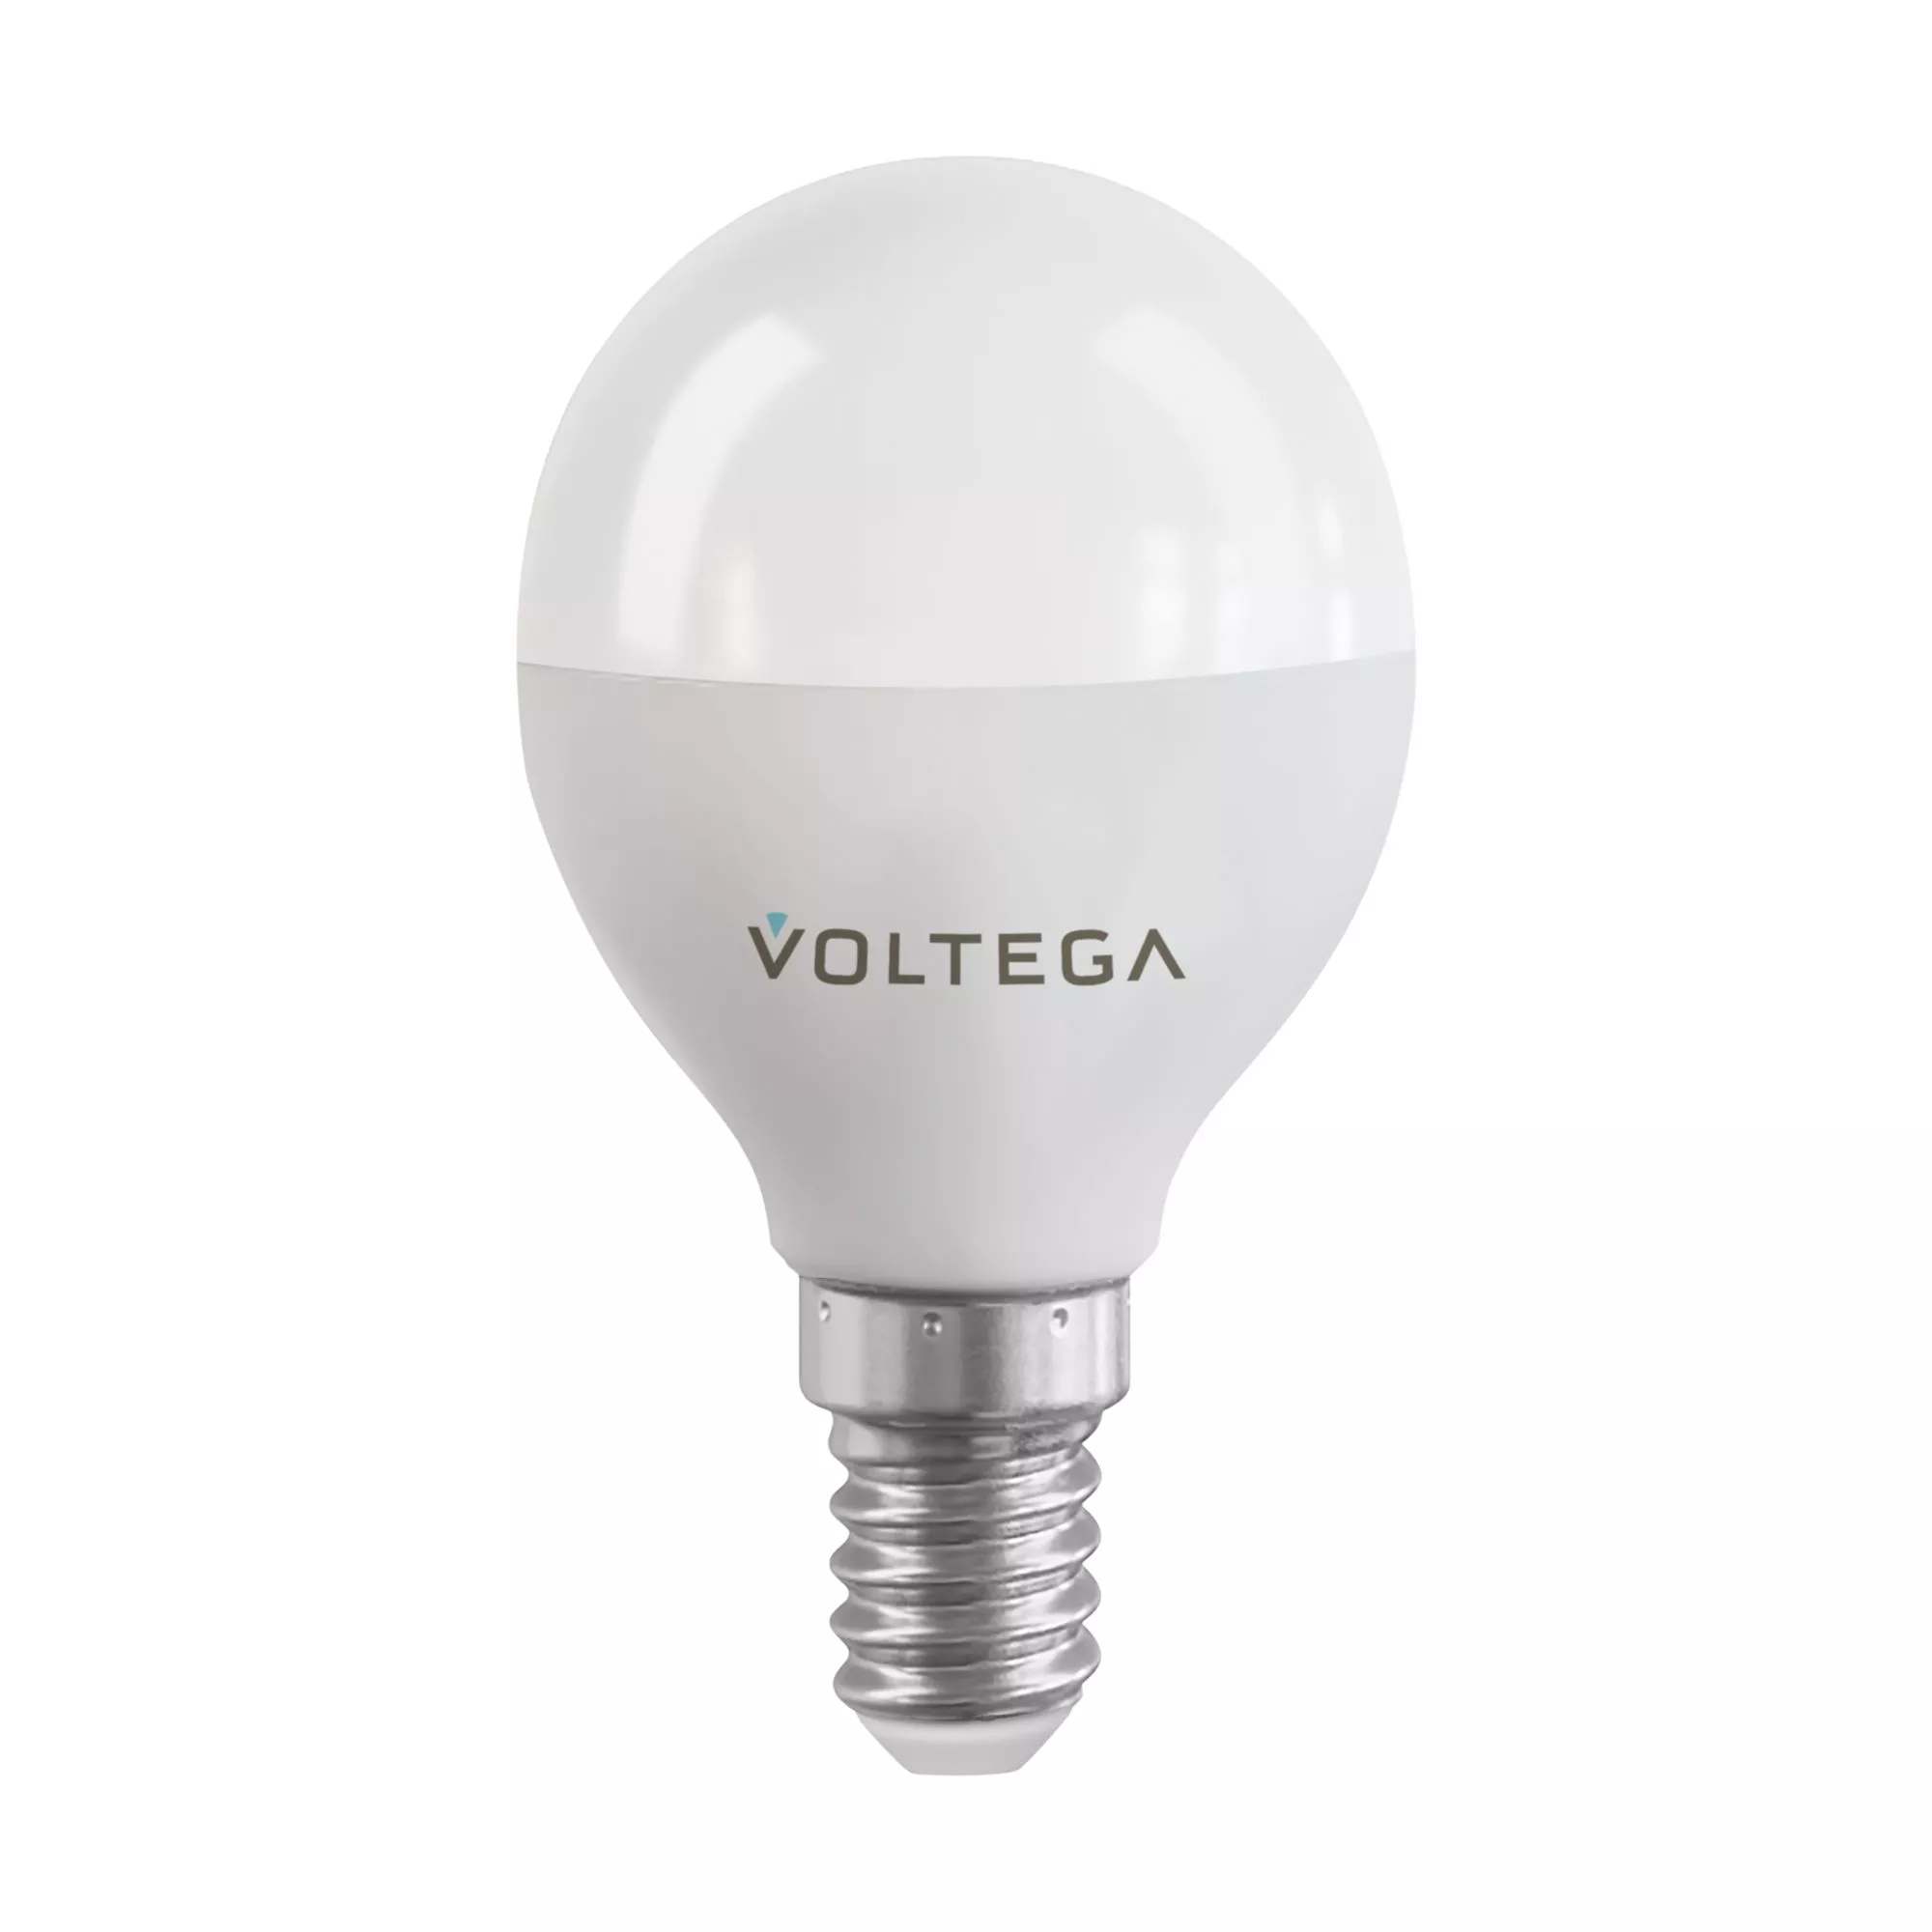 Лампочка Voltega Wi-Fi bulbs 2428